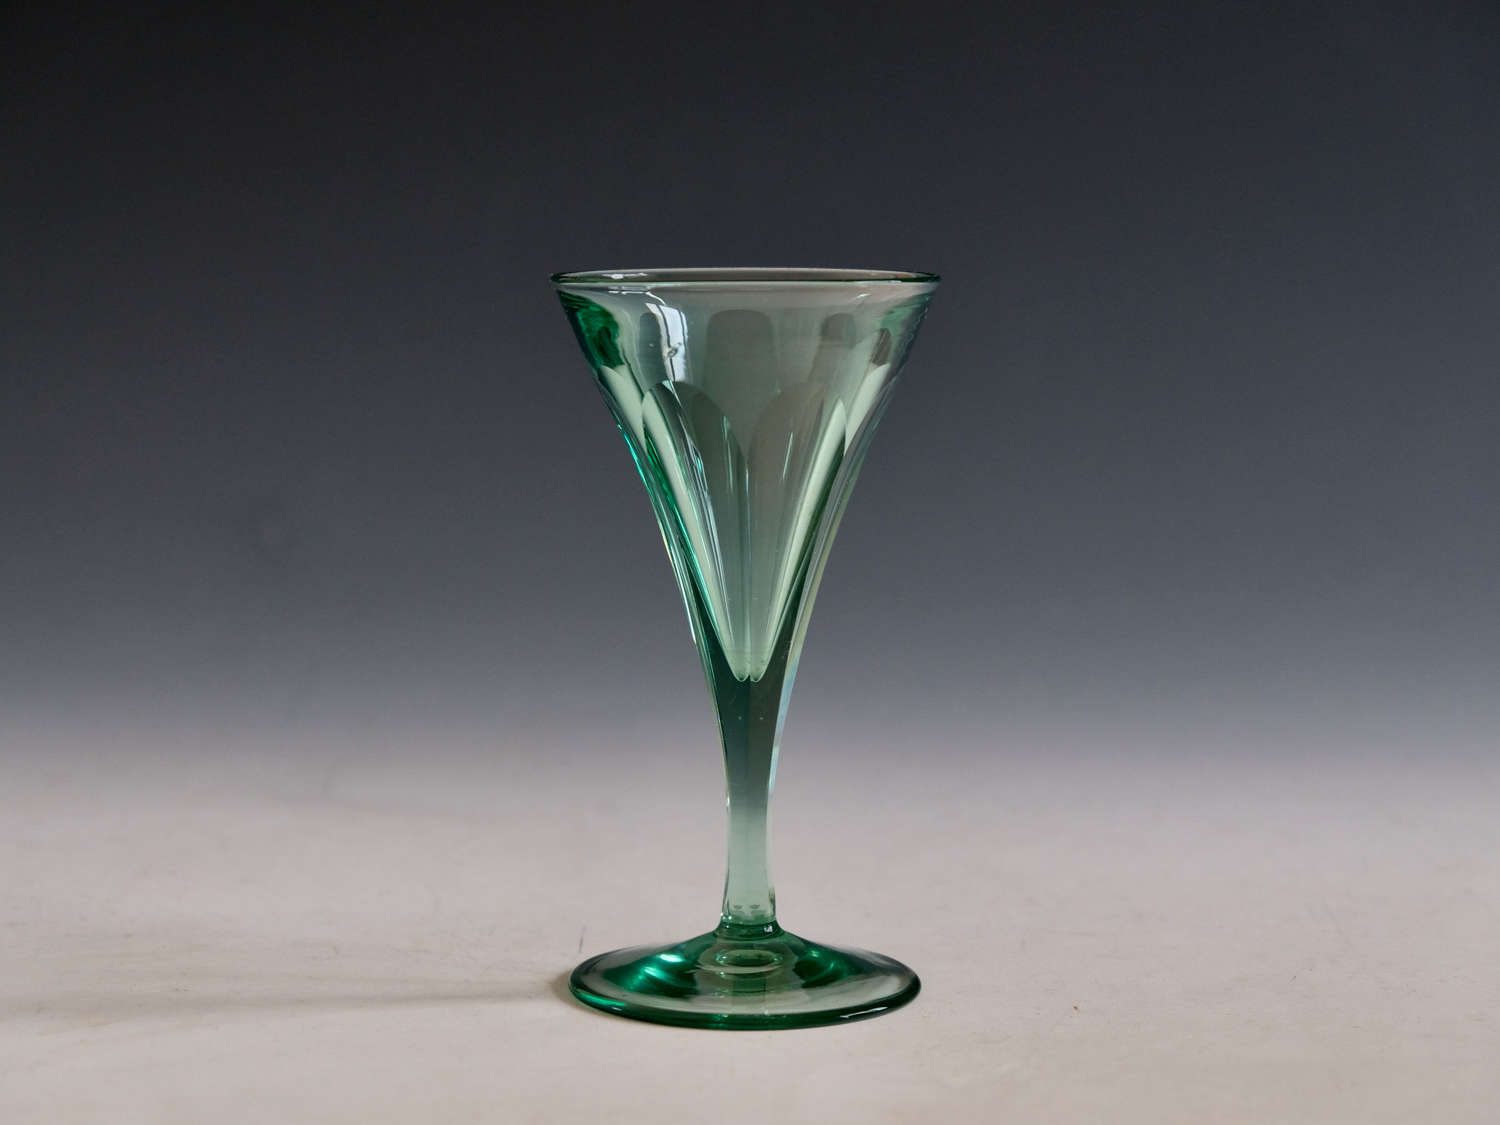 Antique glass - green wine glass English c1840